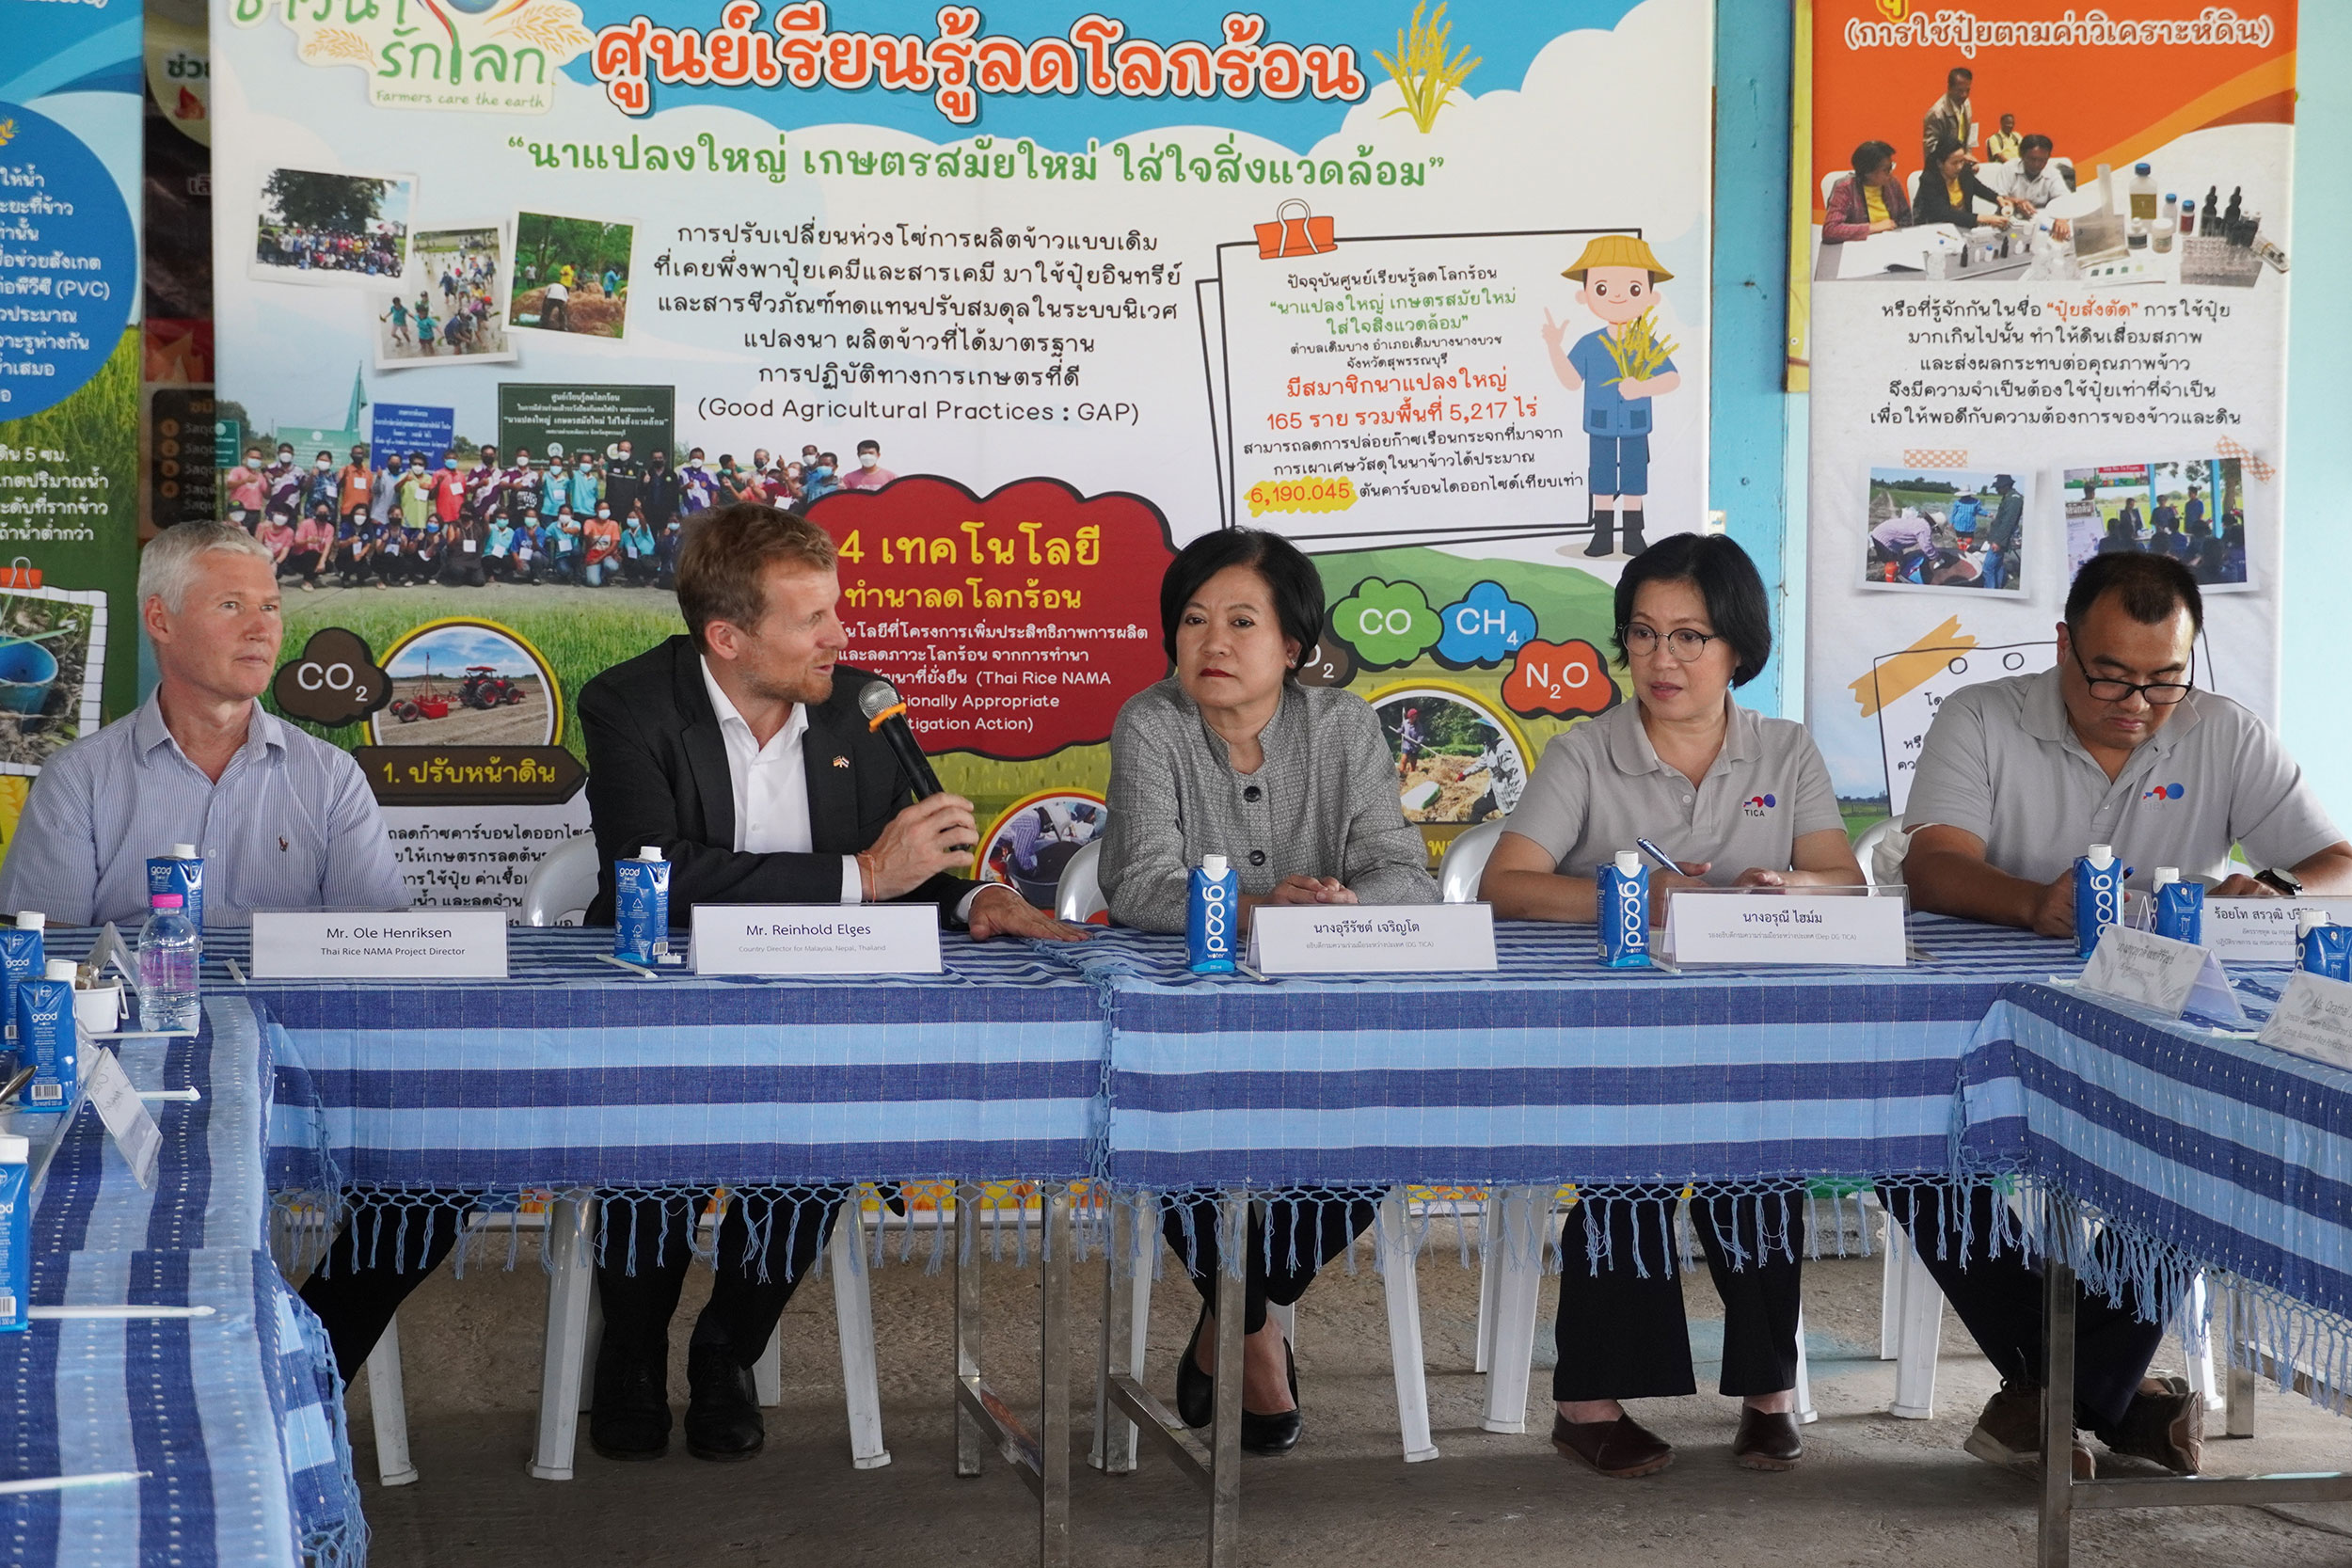 Ureerat Charoentoh, Director–General of Thailand International Cooperation Agency (centre) visited the Thai Rice NAMA demonstration site (จากซ้ายไปขวา：คุณโอเล เฮนริคเซ่น ผู้อำนวยการโครงการ ไทย ไรซ์ นามา คุณไรน์โฮลด์ เอลเกสผู้อำนวยการ GIZ ประจำประเทศไทย คุณอุรีรัชต์ เจริญโต อธิบดีกรมความร่วมมือระหว่างประเทศ คุณอรุณี ไฮม์ม รองอธิบดีกรมความร่วมมือระหว่างประเทศ และร้อยโทสรวุฒิ ปรีดีดิลก อัครราชทูต ณ กรุงเฮลซิงกิ ปฏิบัติราชการ ณ กรมความร่วมมือระหว่างประเทศ)